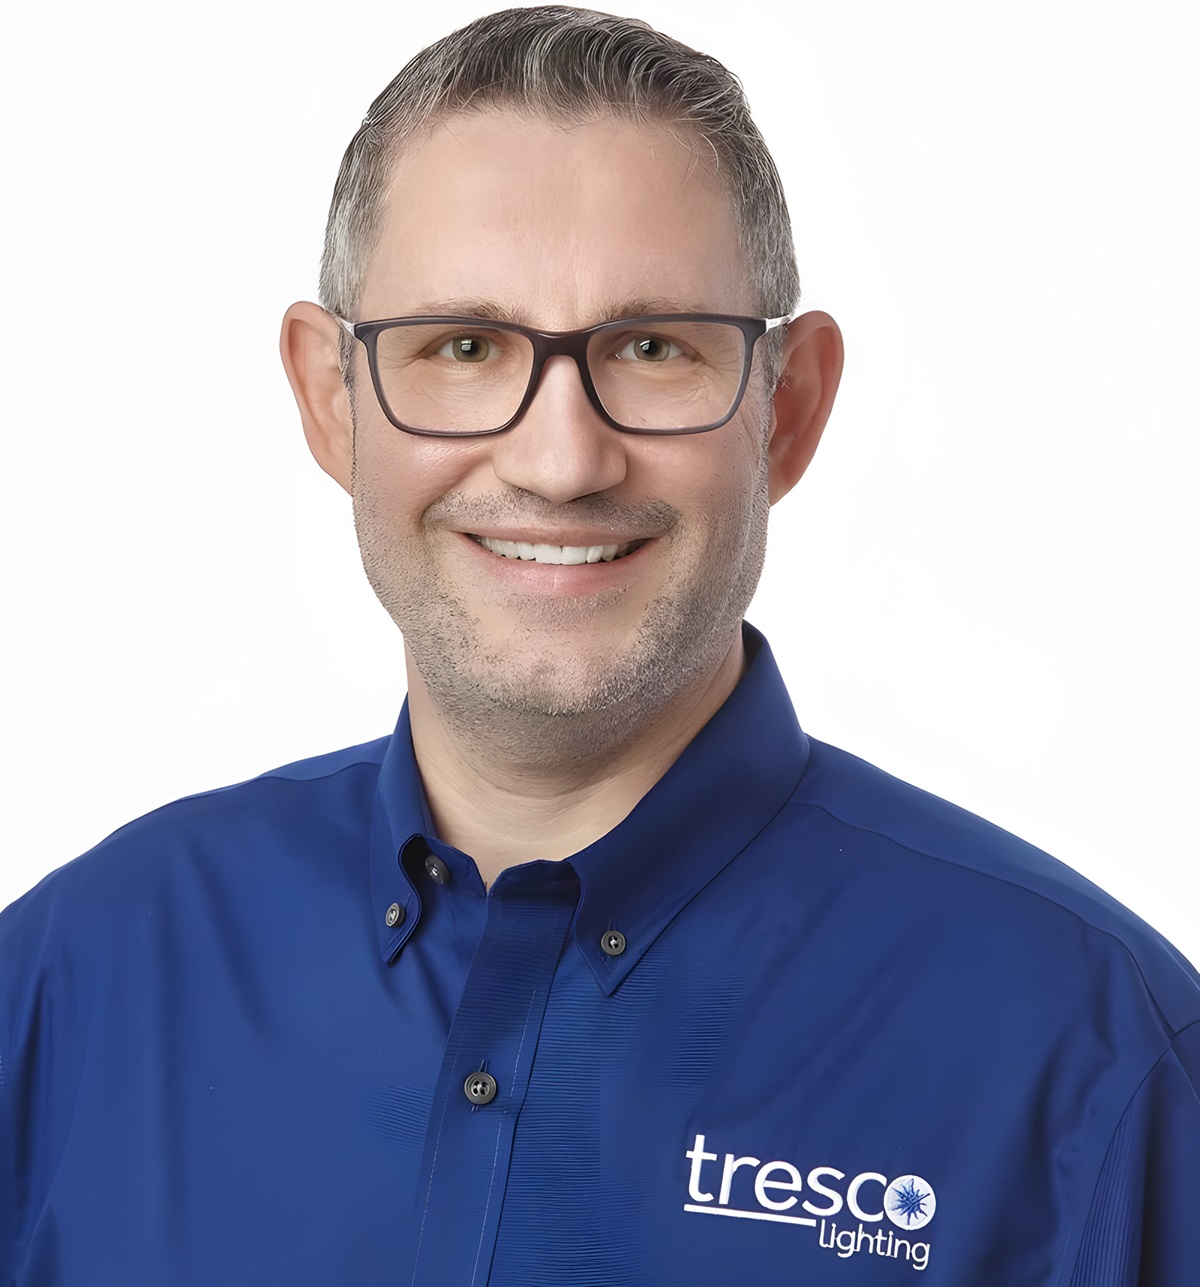 Rev-A-Shelf Announces Promotion of Michael Shelly as Director of Lighting for Tresco Lighting